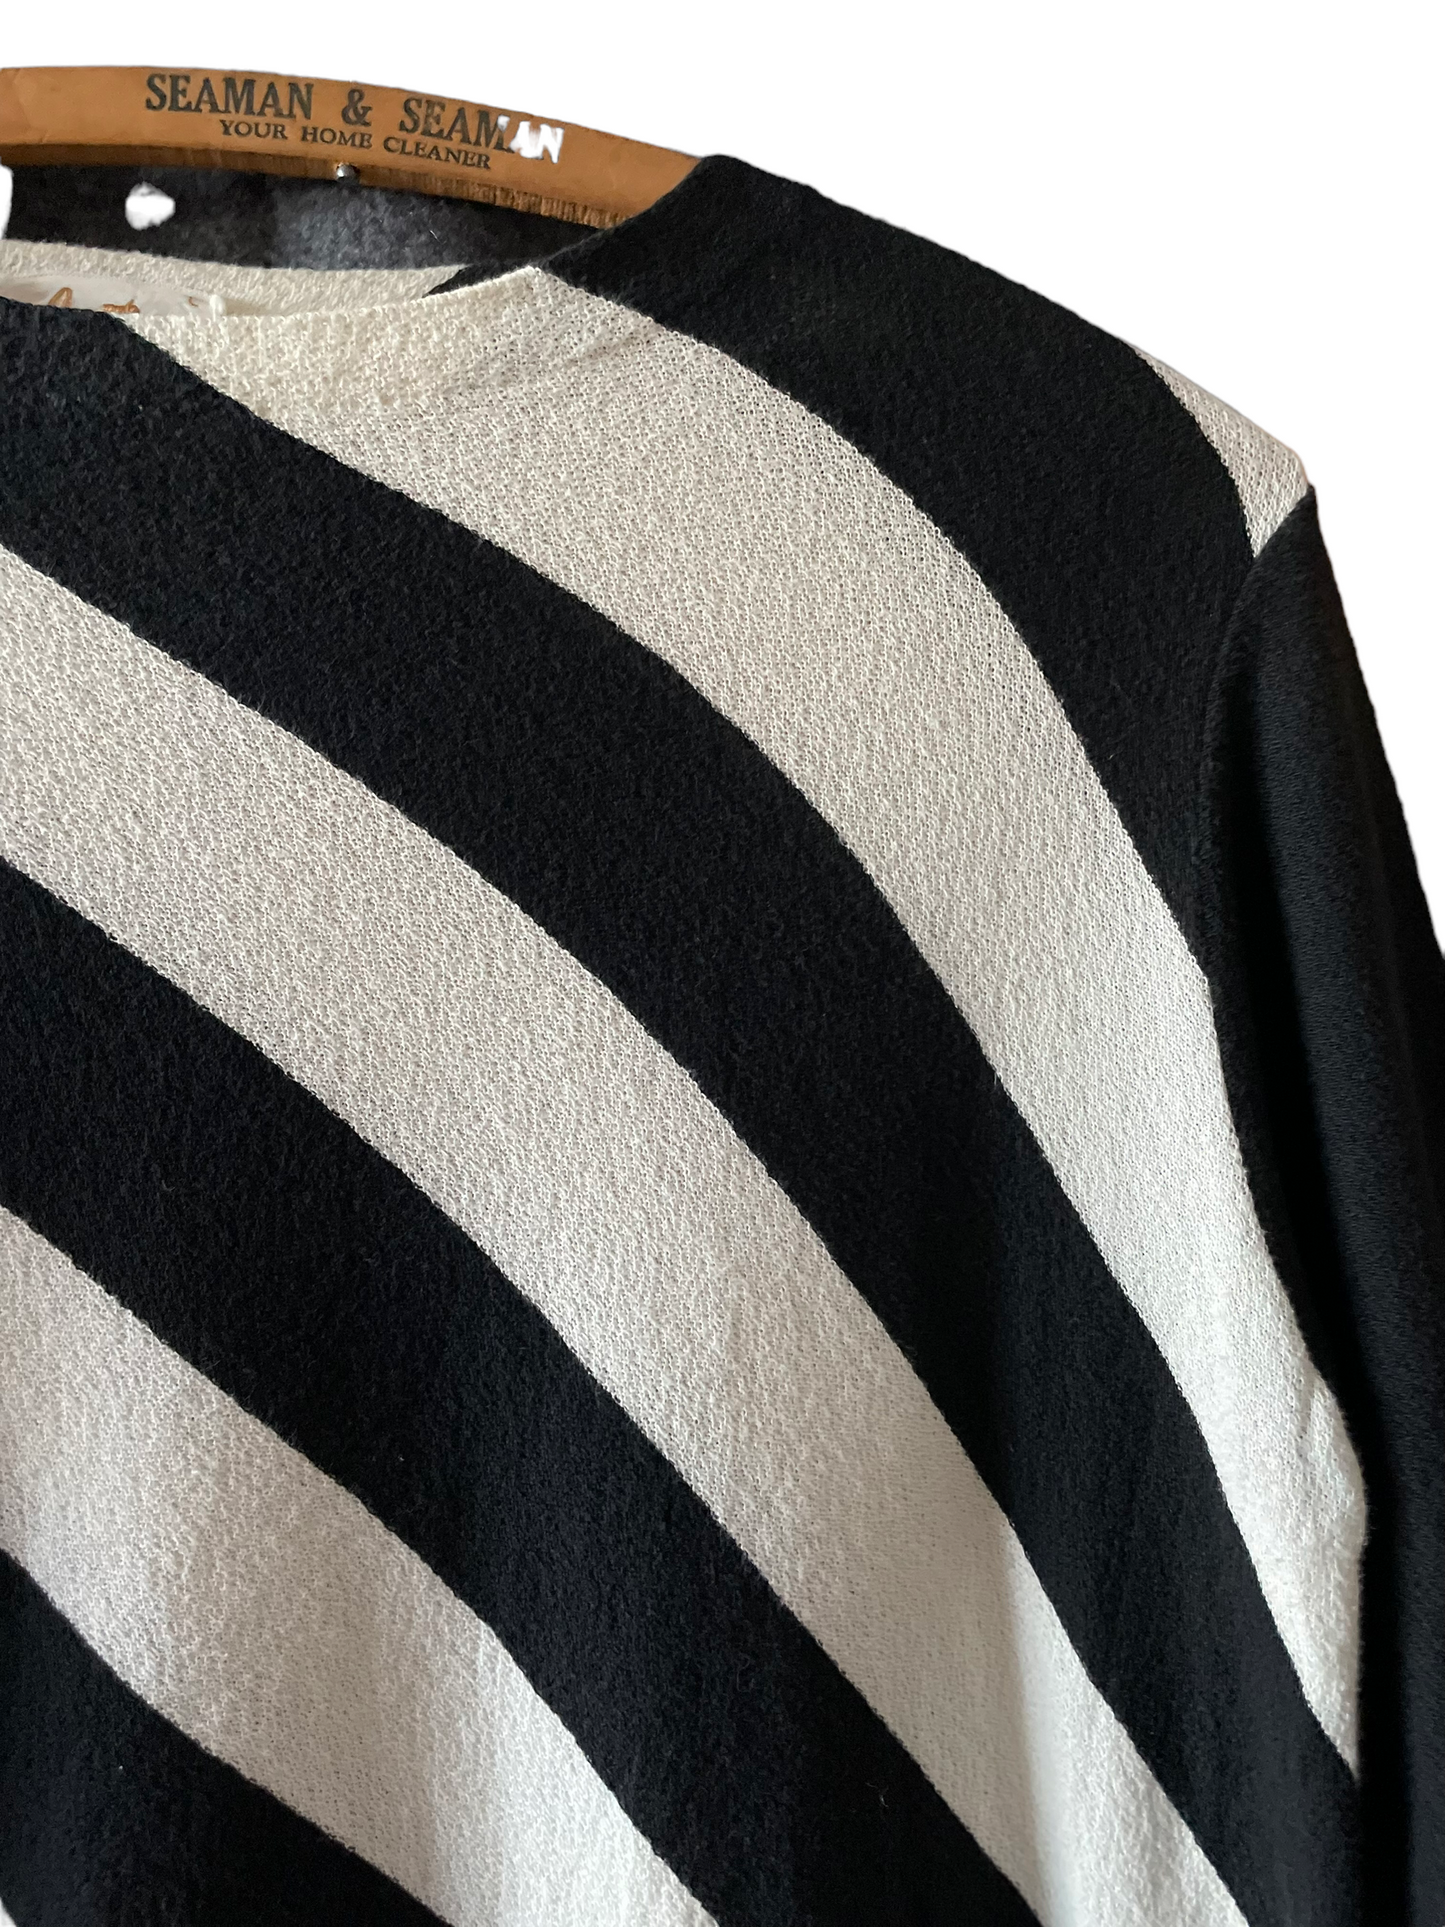 Left front shoulder view of Vintage 1950s Jantzen Striped Top | Barn Owl Seattle | Vintage Jantzen Clothing